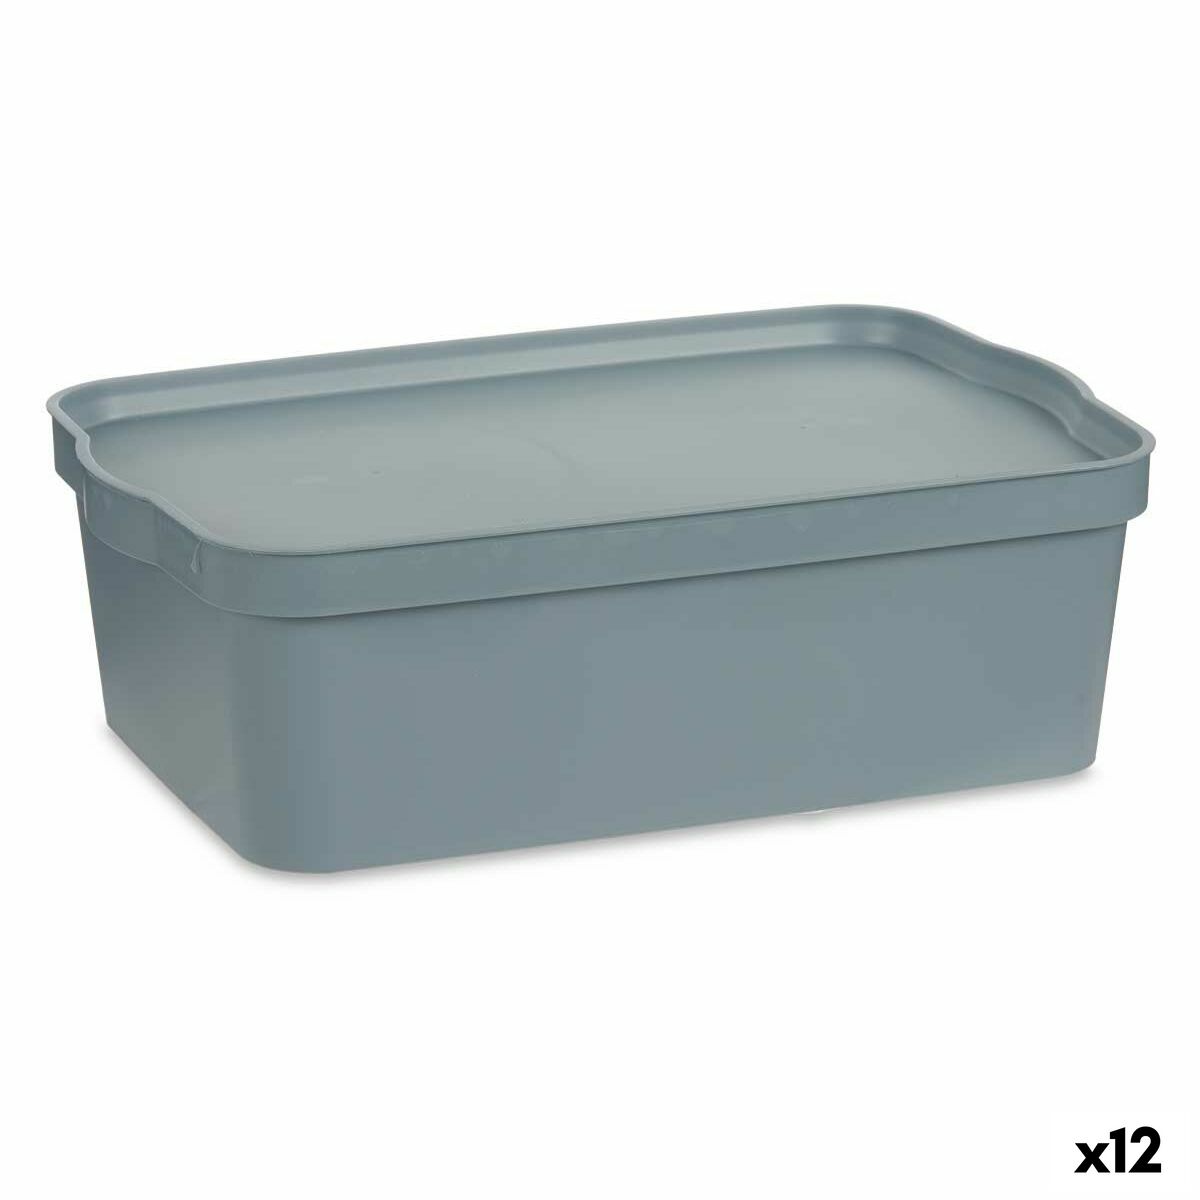 Storage box with lid Gray Plastic 14 L 29.5 x 14.3 x 45 cm (12 parts)